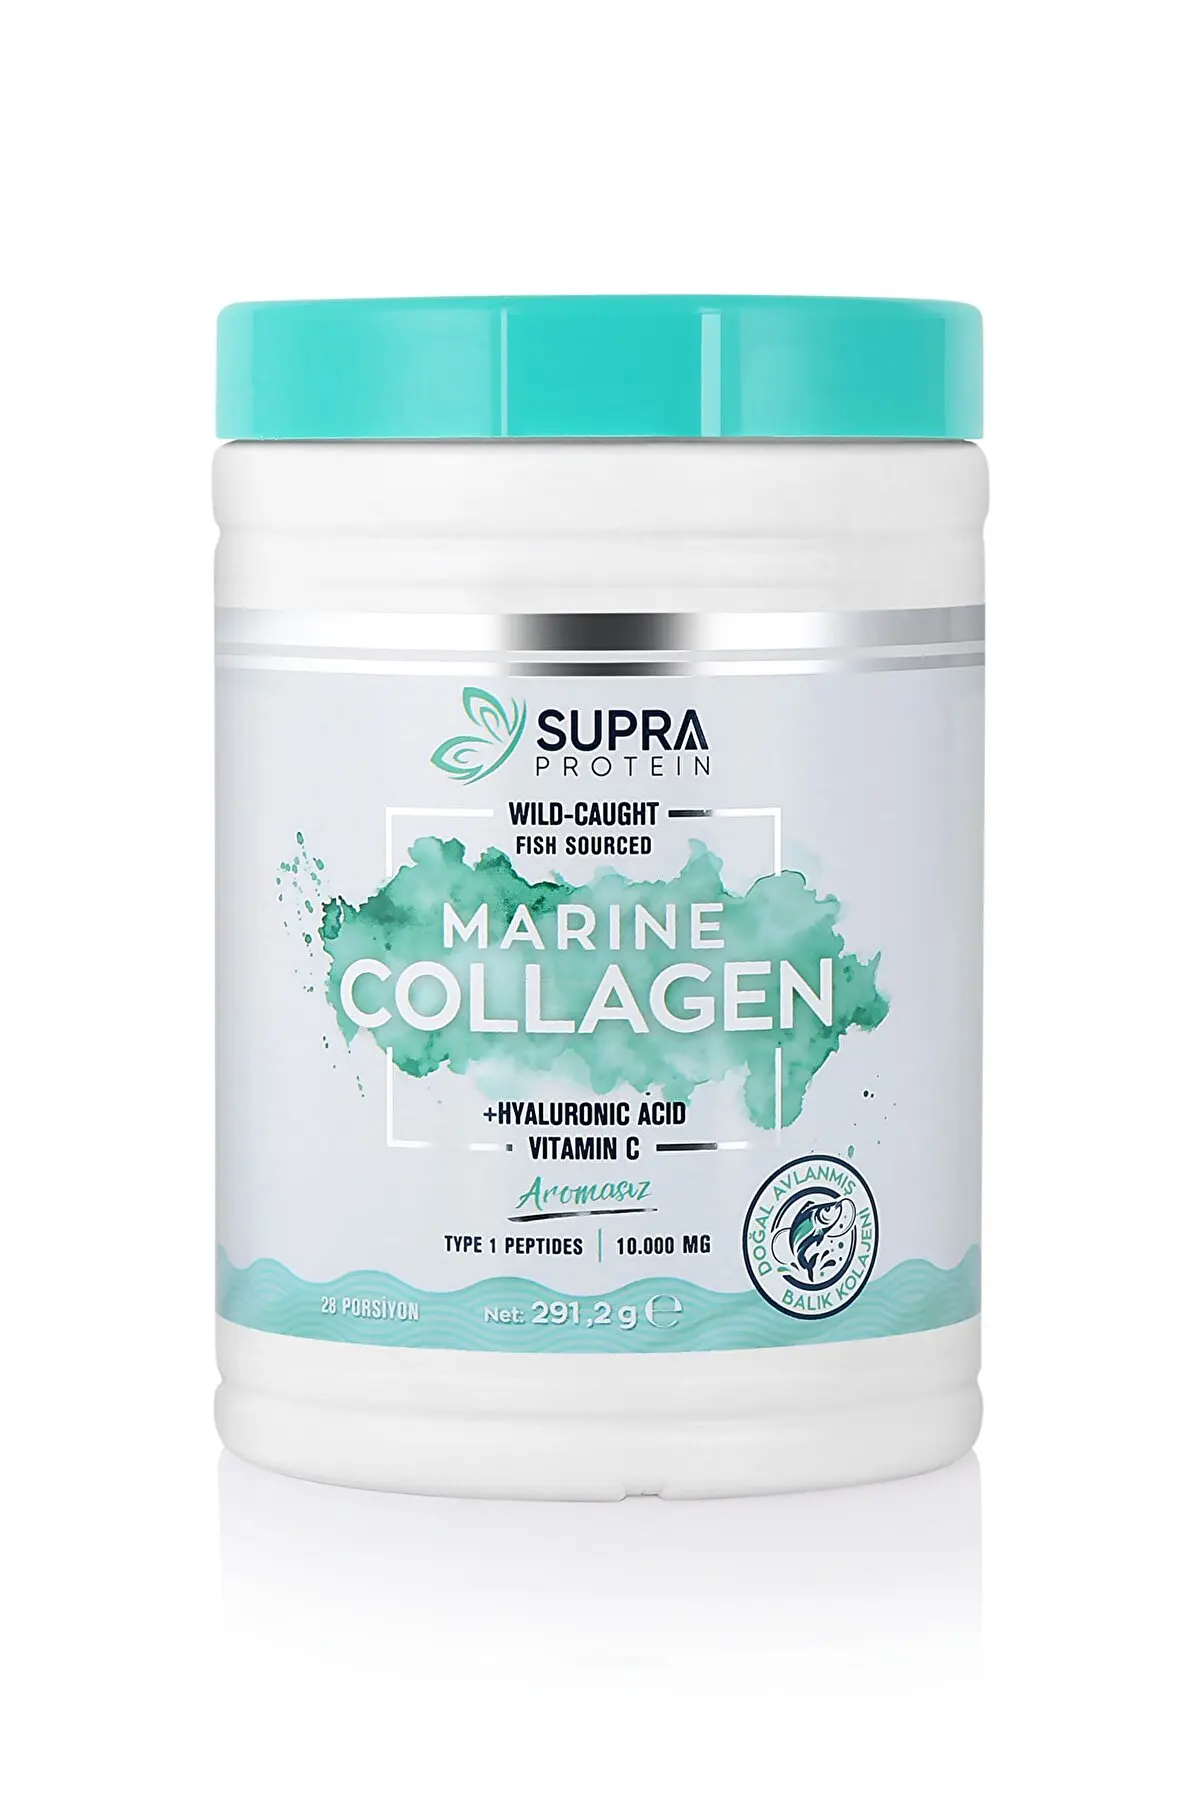 

Supra Protein Marine Collagen, Korean Origin, Fish Collagen, Hyaluronic Acid, Vitamin C, 28-Day, Cartilage and Bone Strengthener